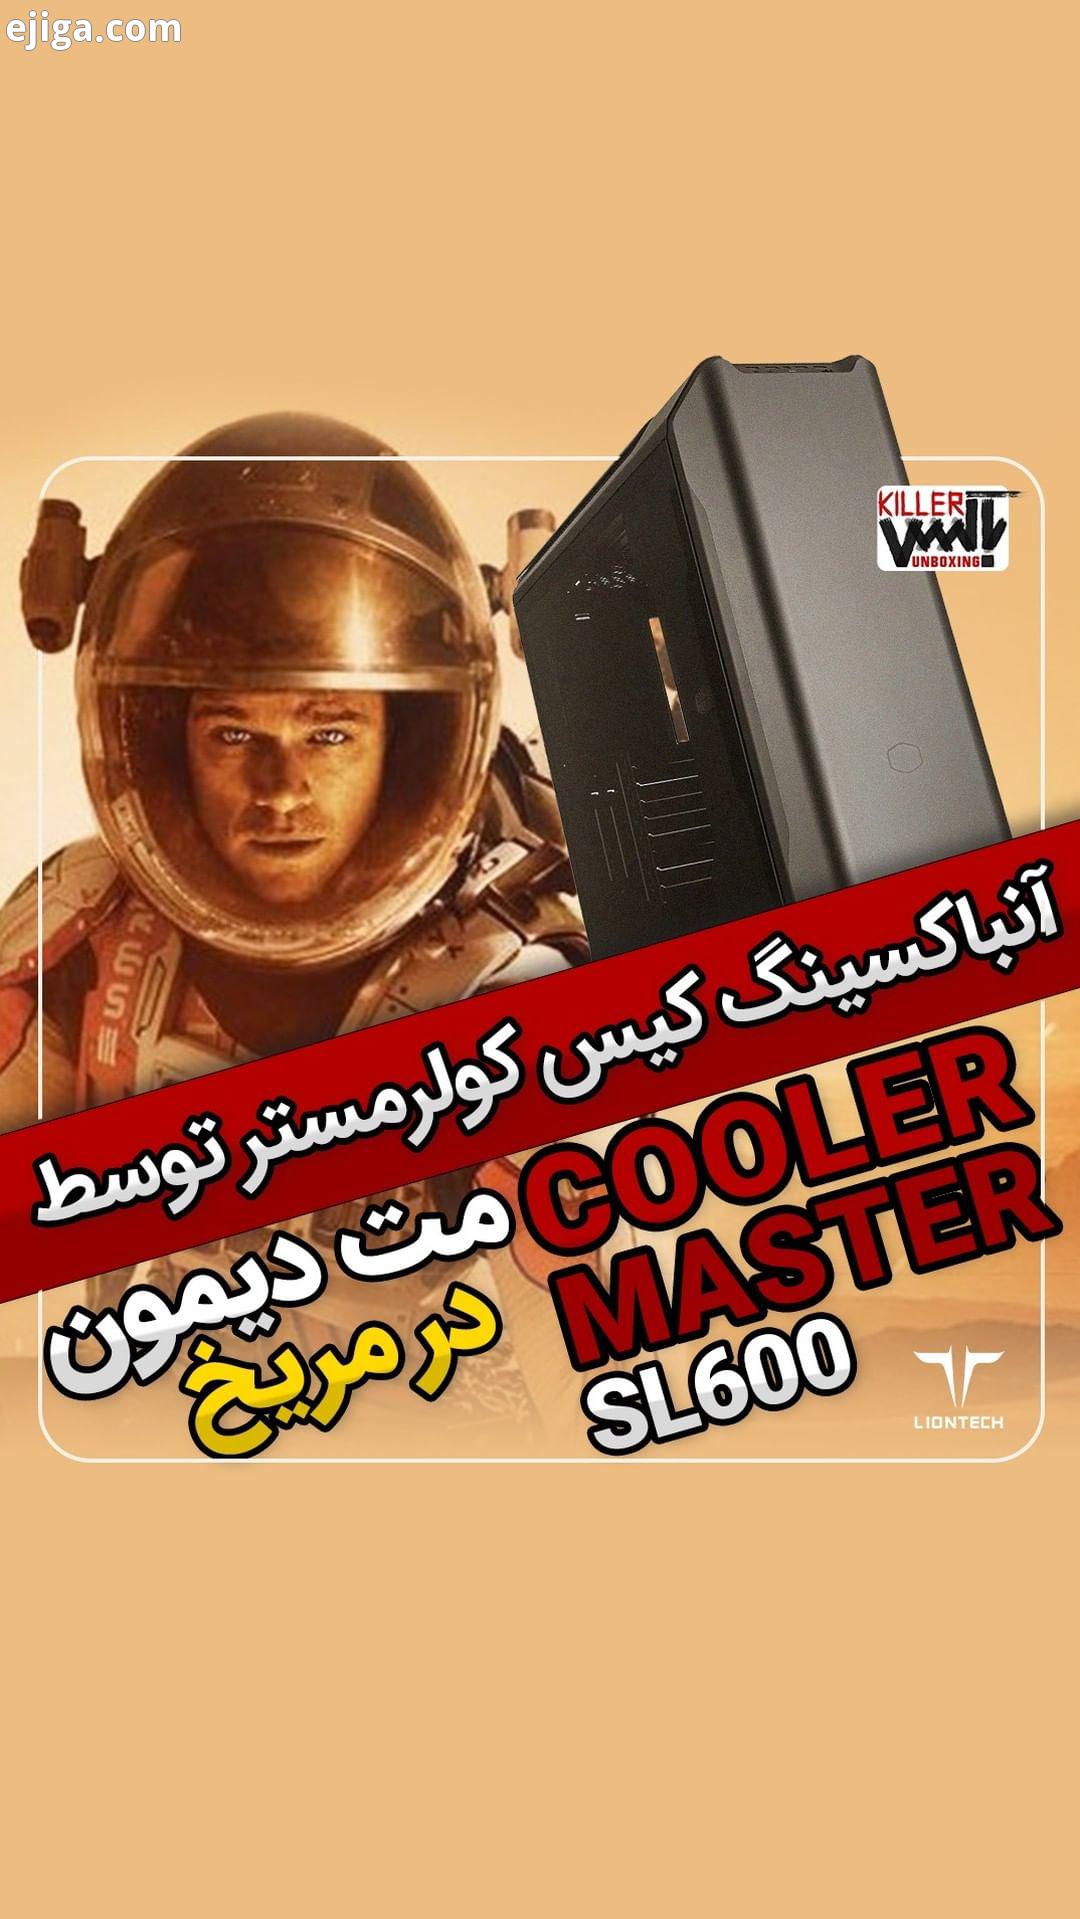 Cooler Master MasterCase SL600M